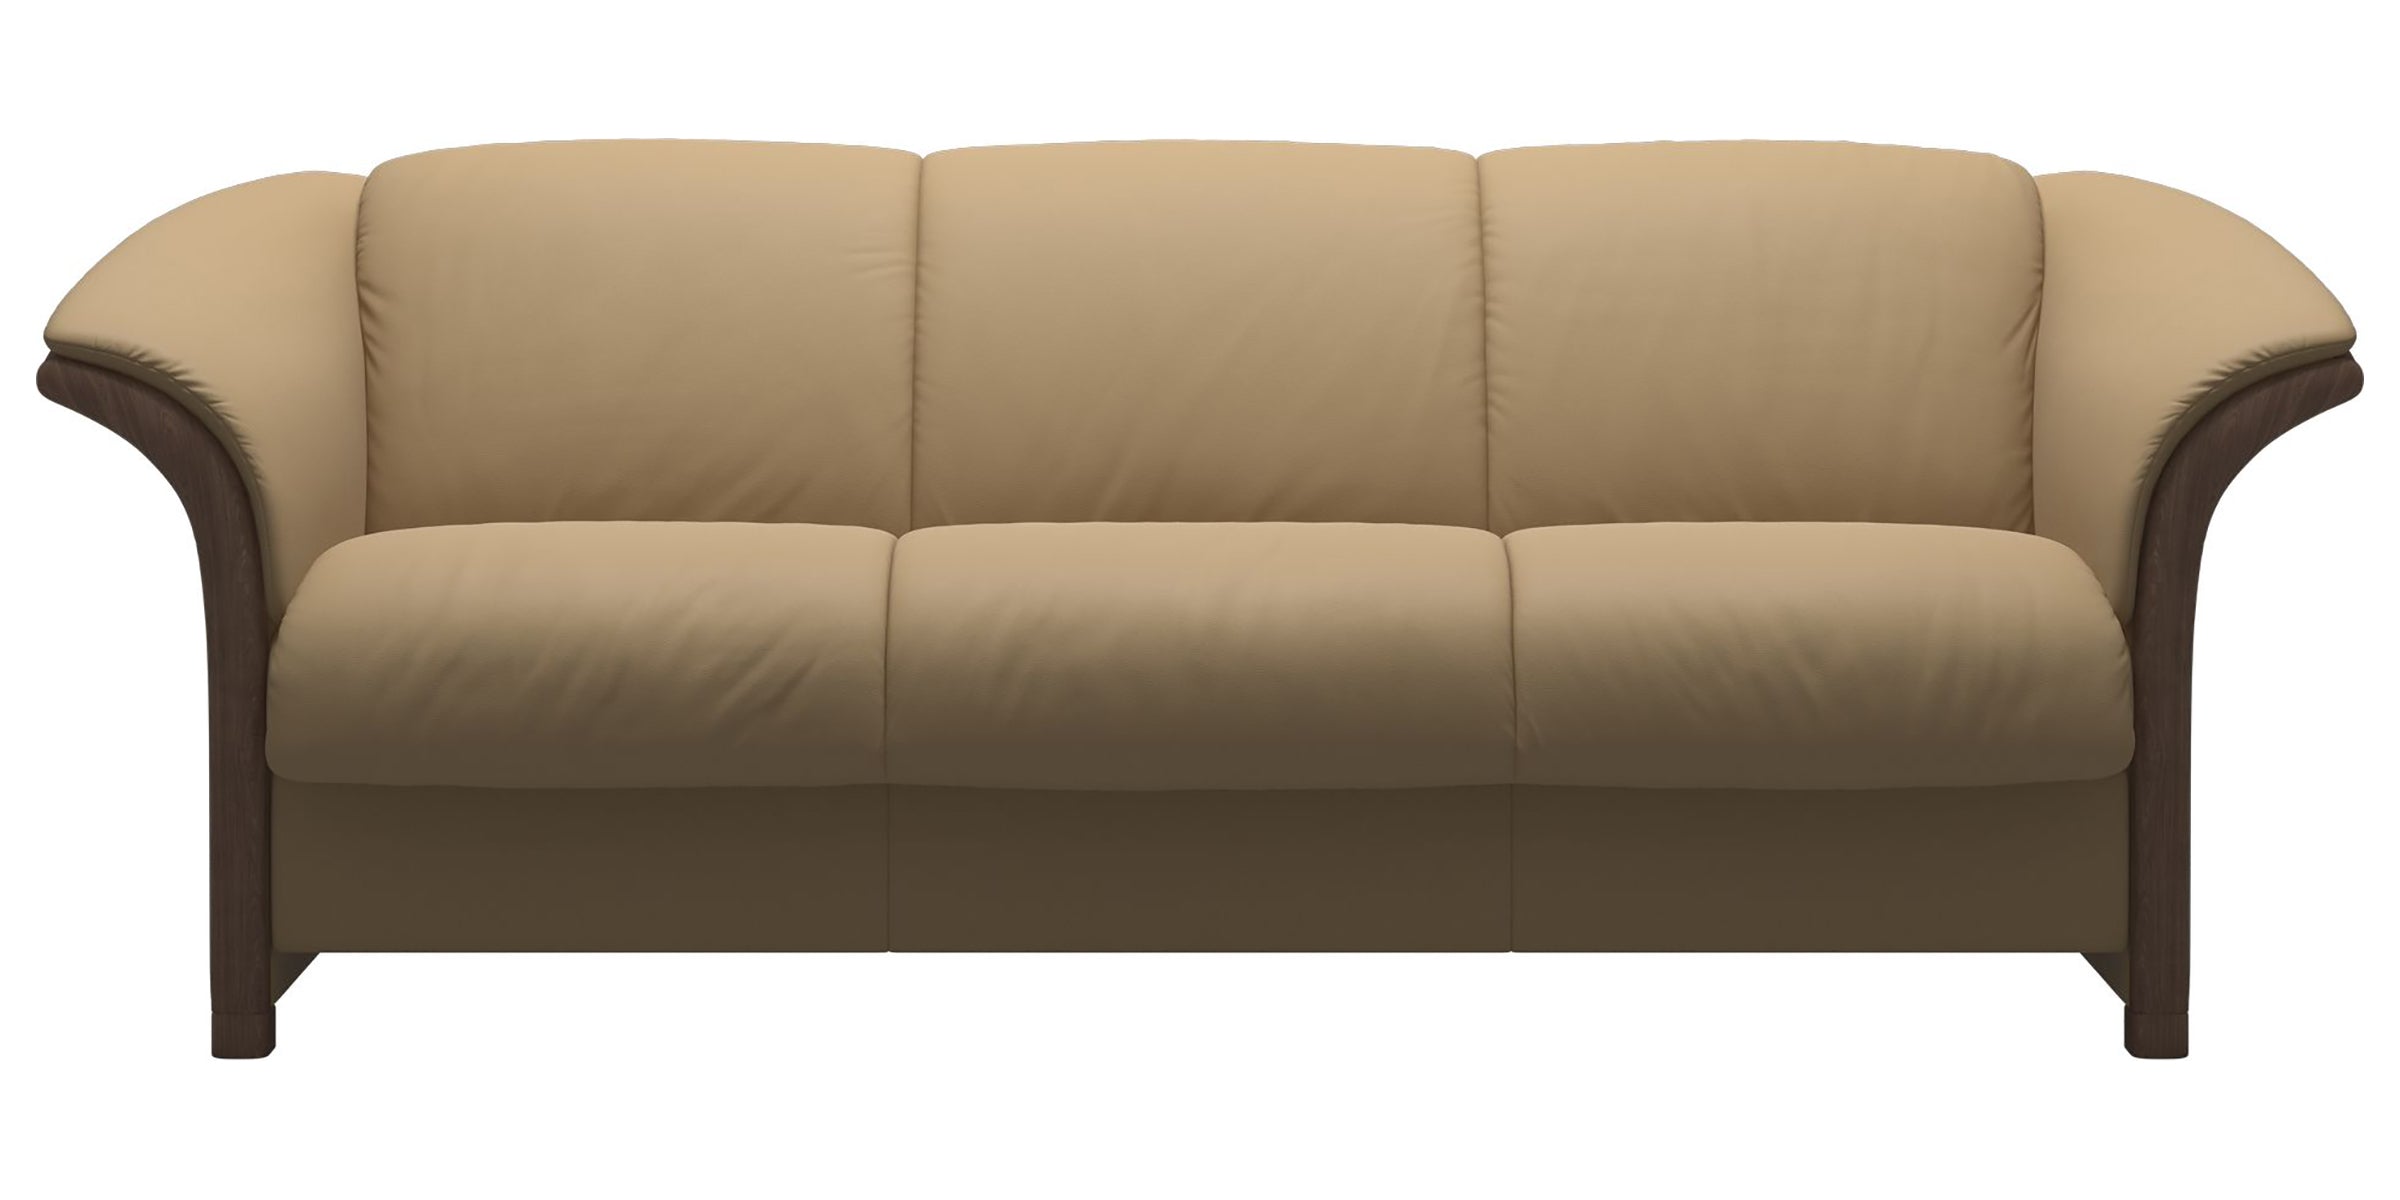 Paloma Leather Sand and Walnut Arm Trim | Stressless Manhattan Sofa | Valley Ridge Furniture